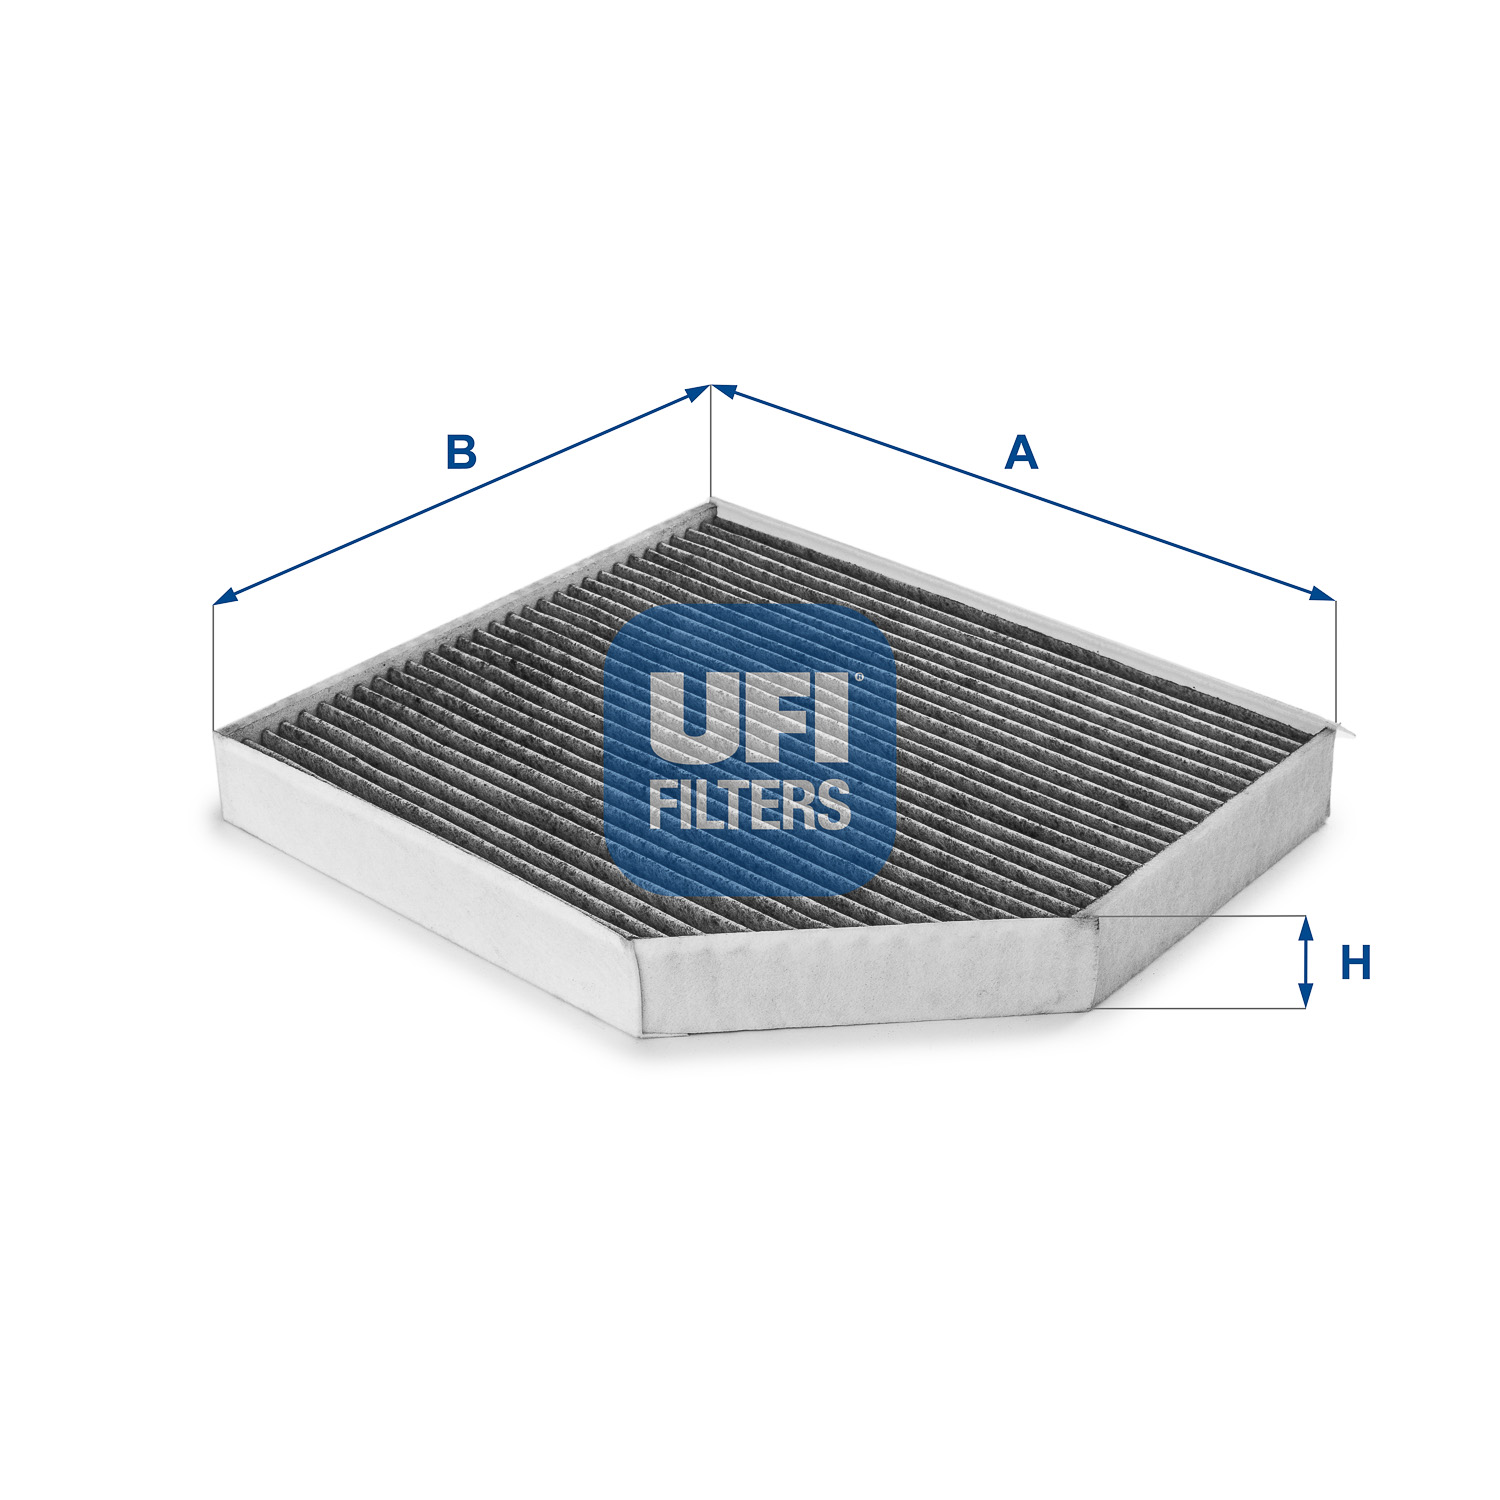 UFI UFI 54.168.00 UFI utastér levegőszűrő